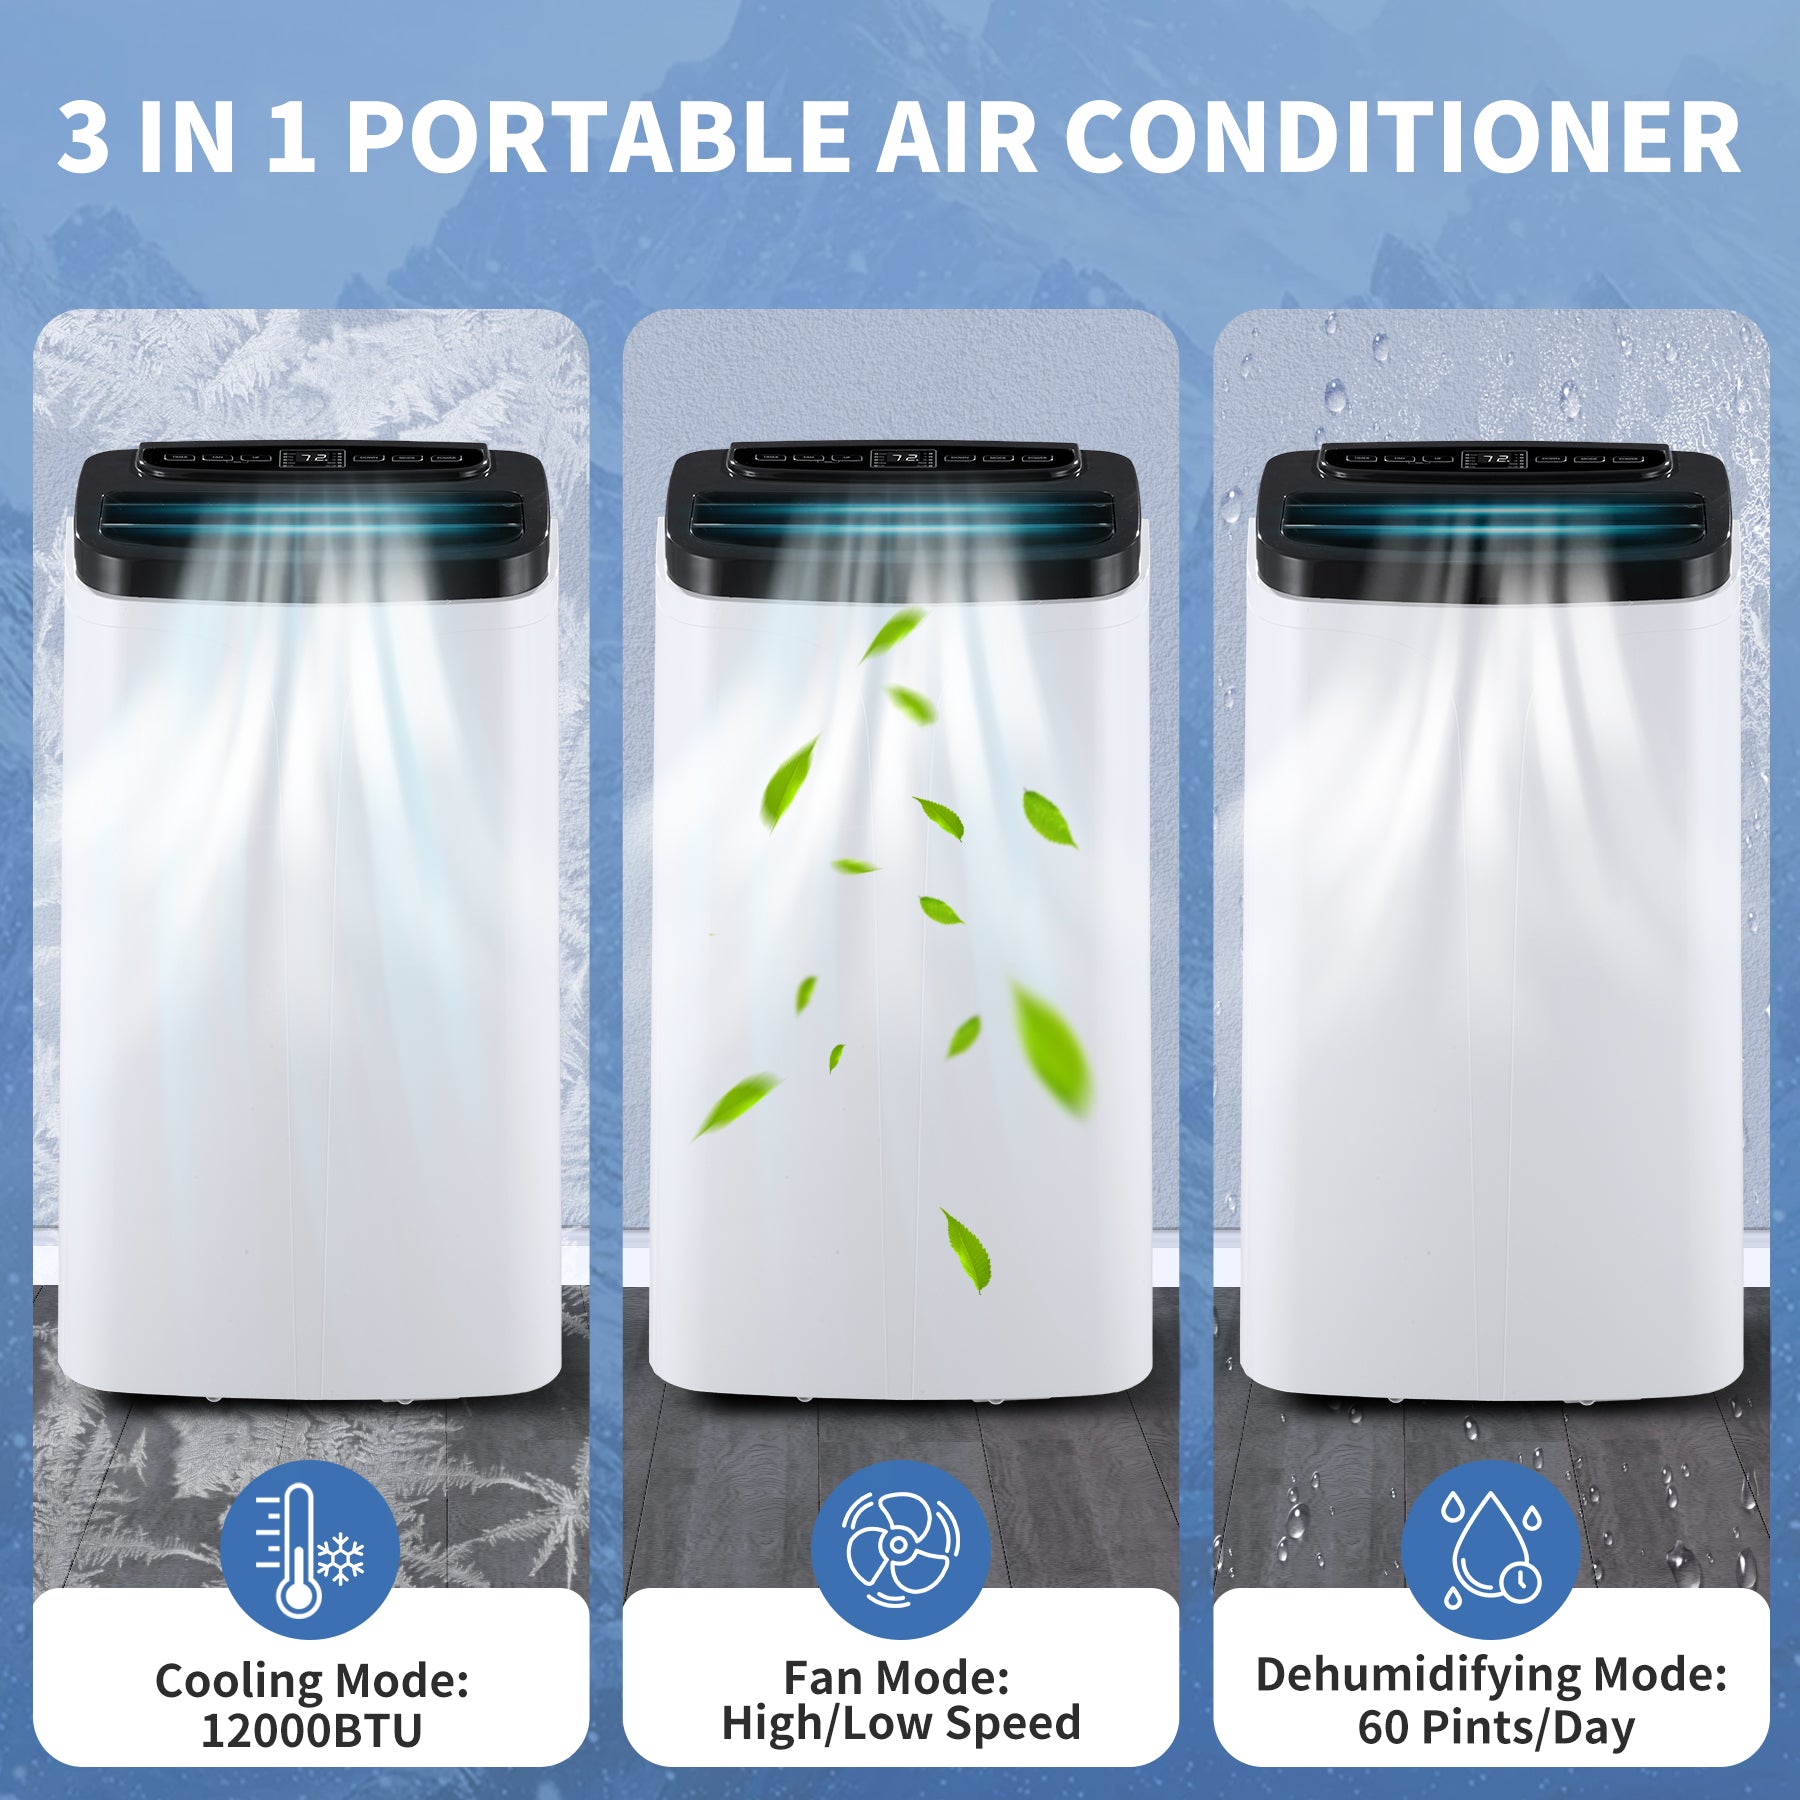 12,000 BTU Portable Air Conditioner, Black and White